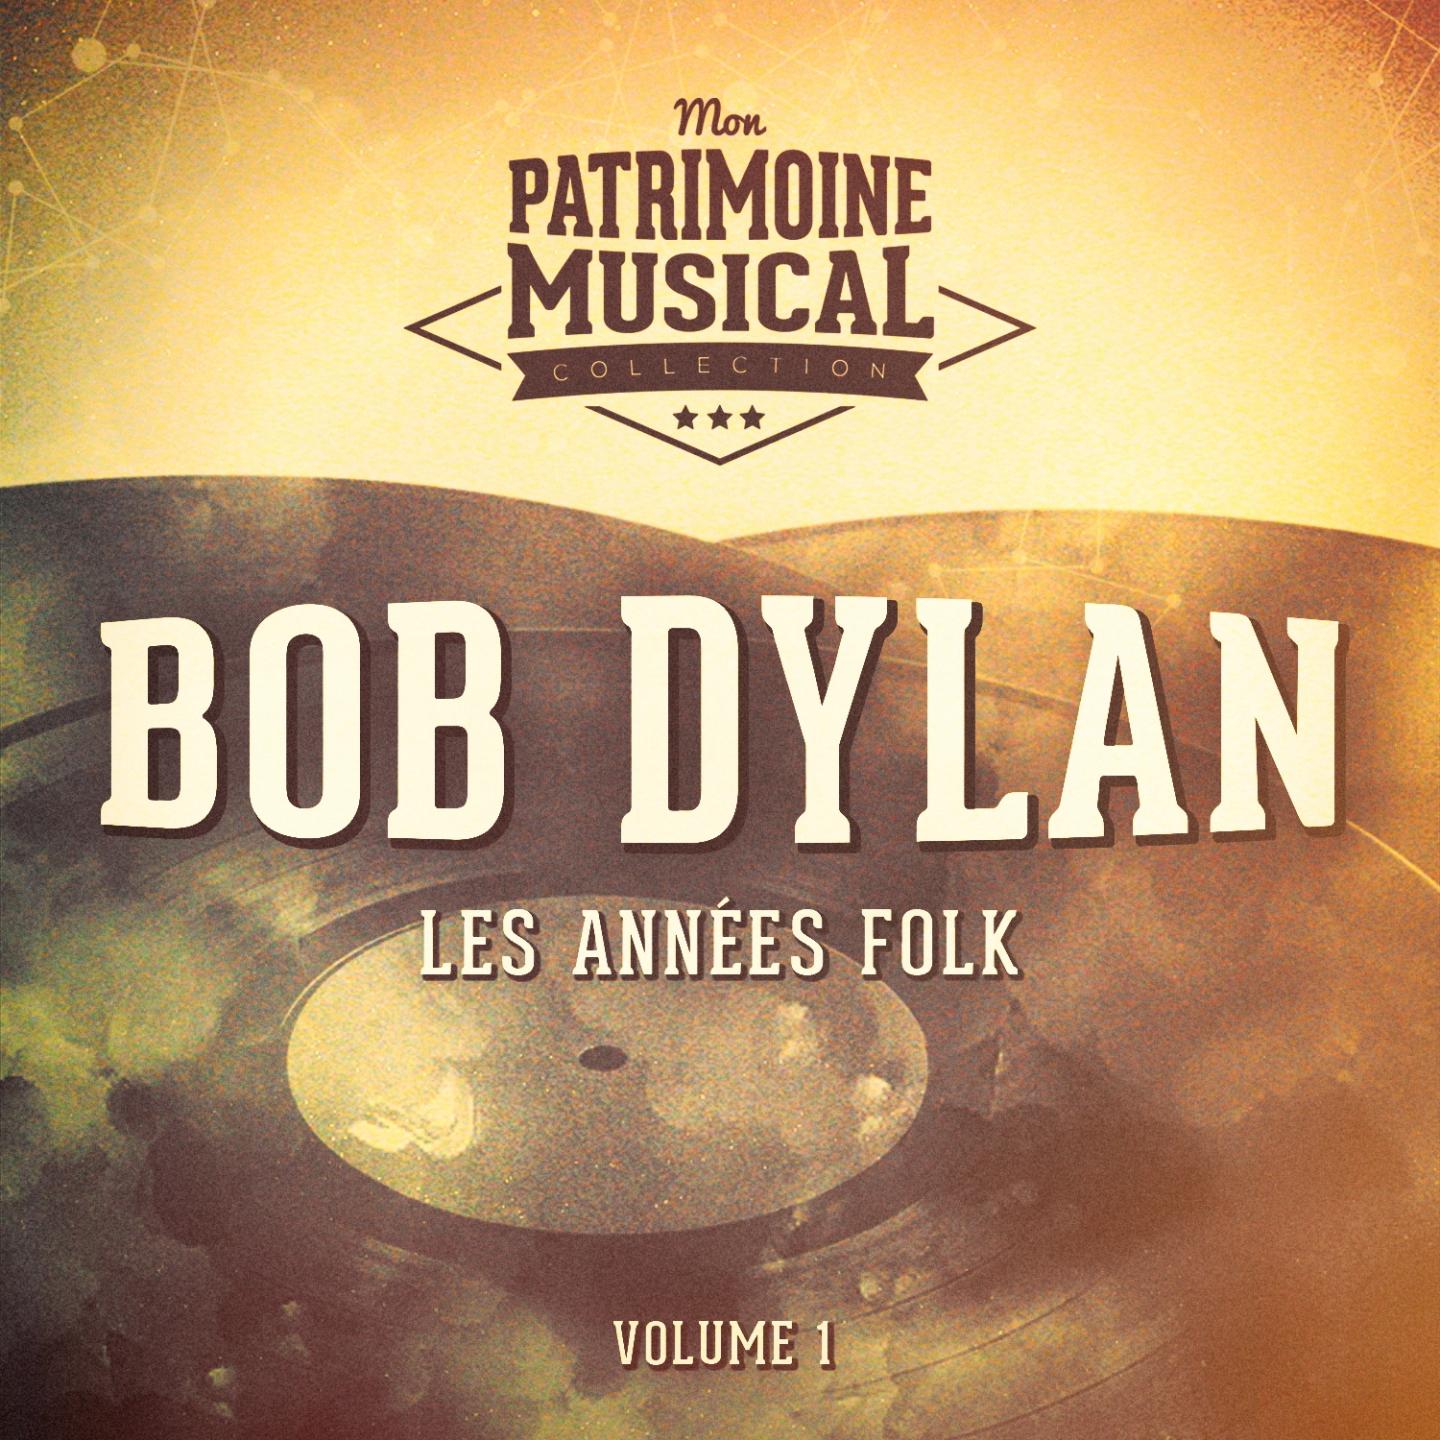 Les Anne es Folk: Bob Dylan, Vol. 1